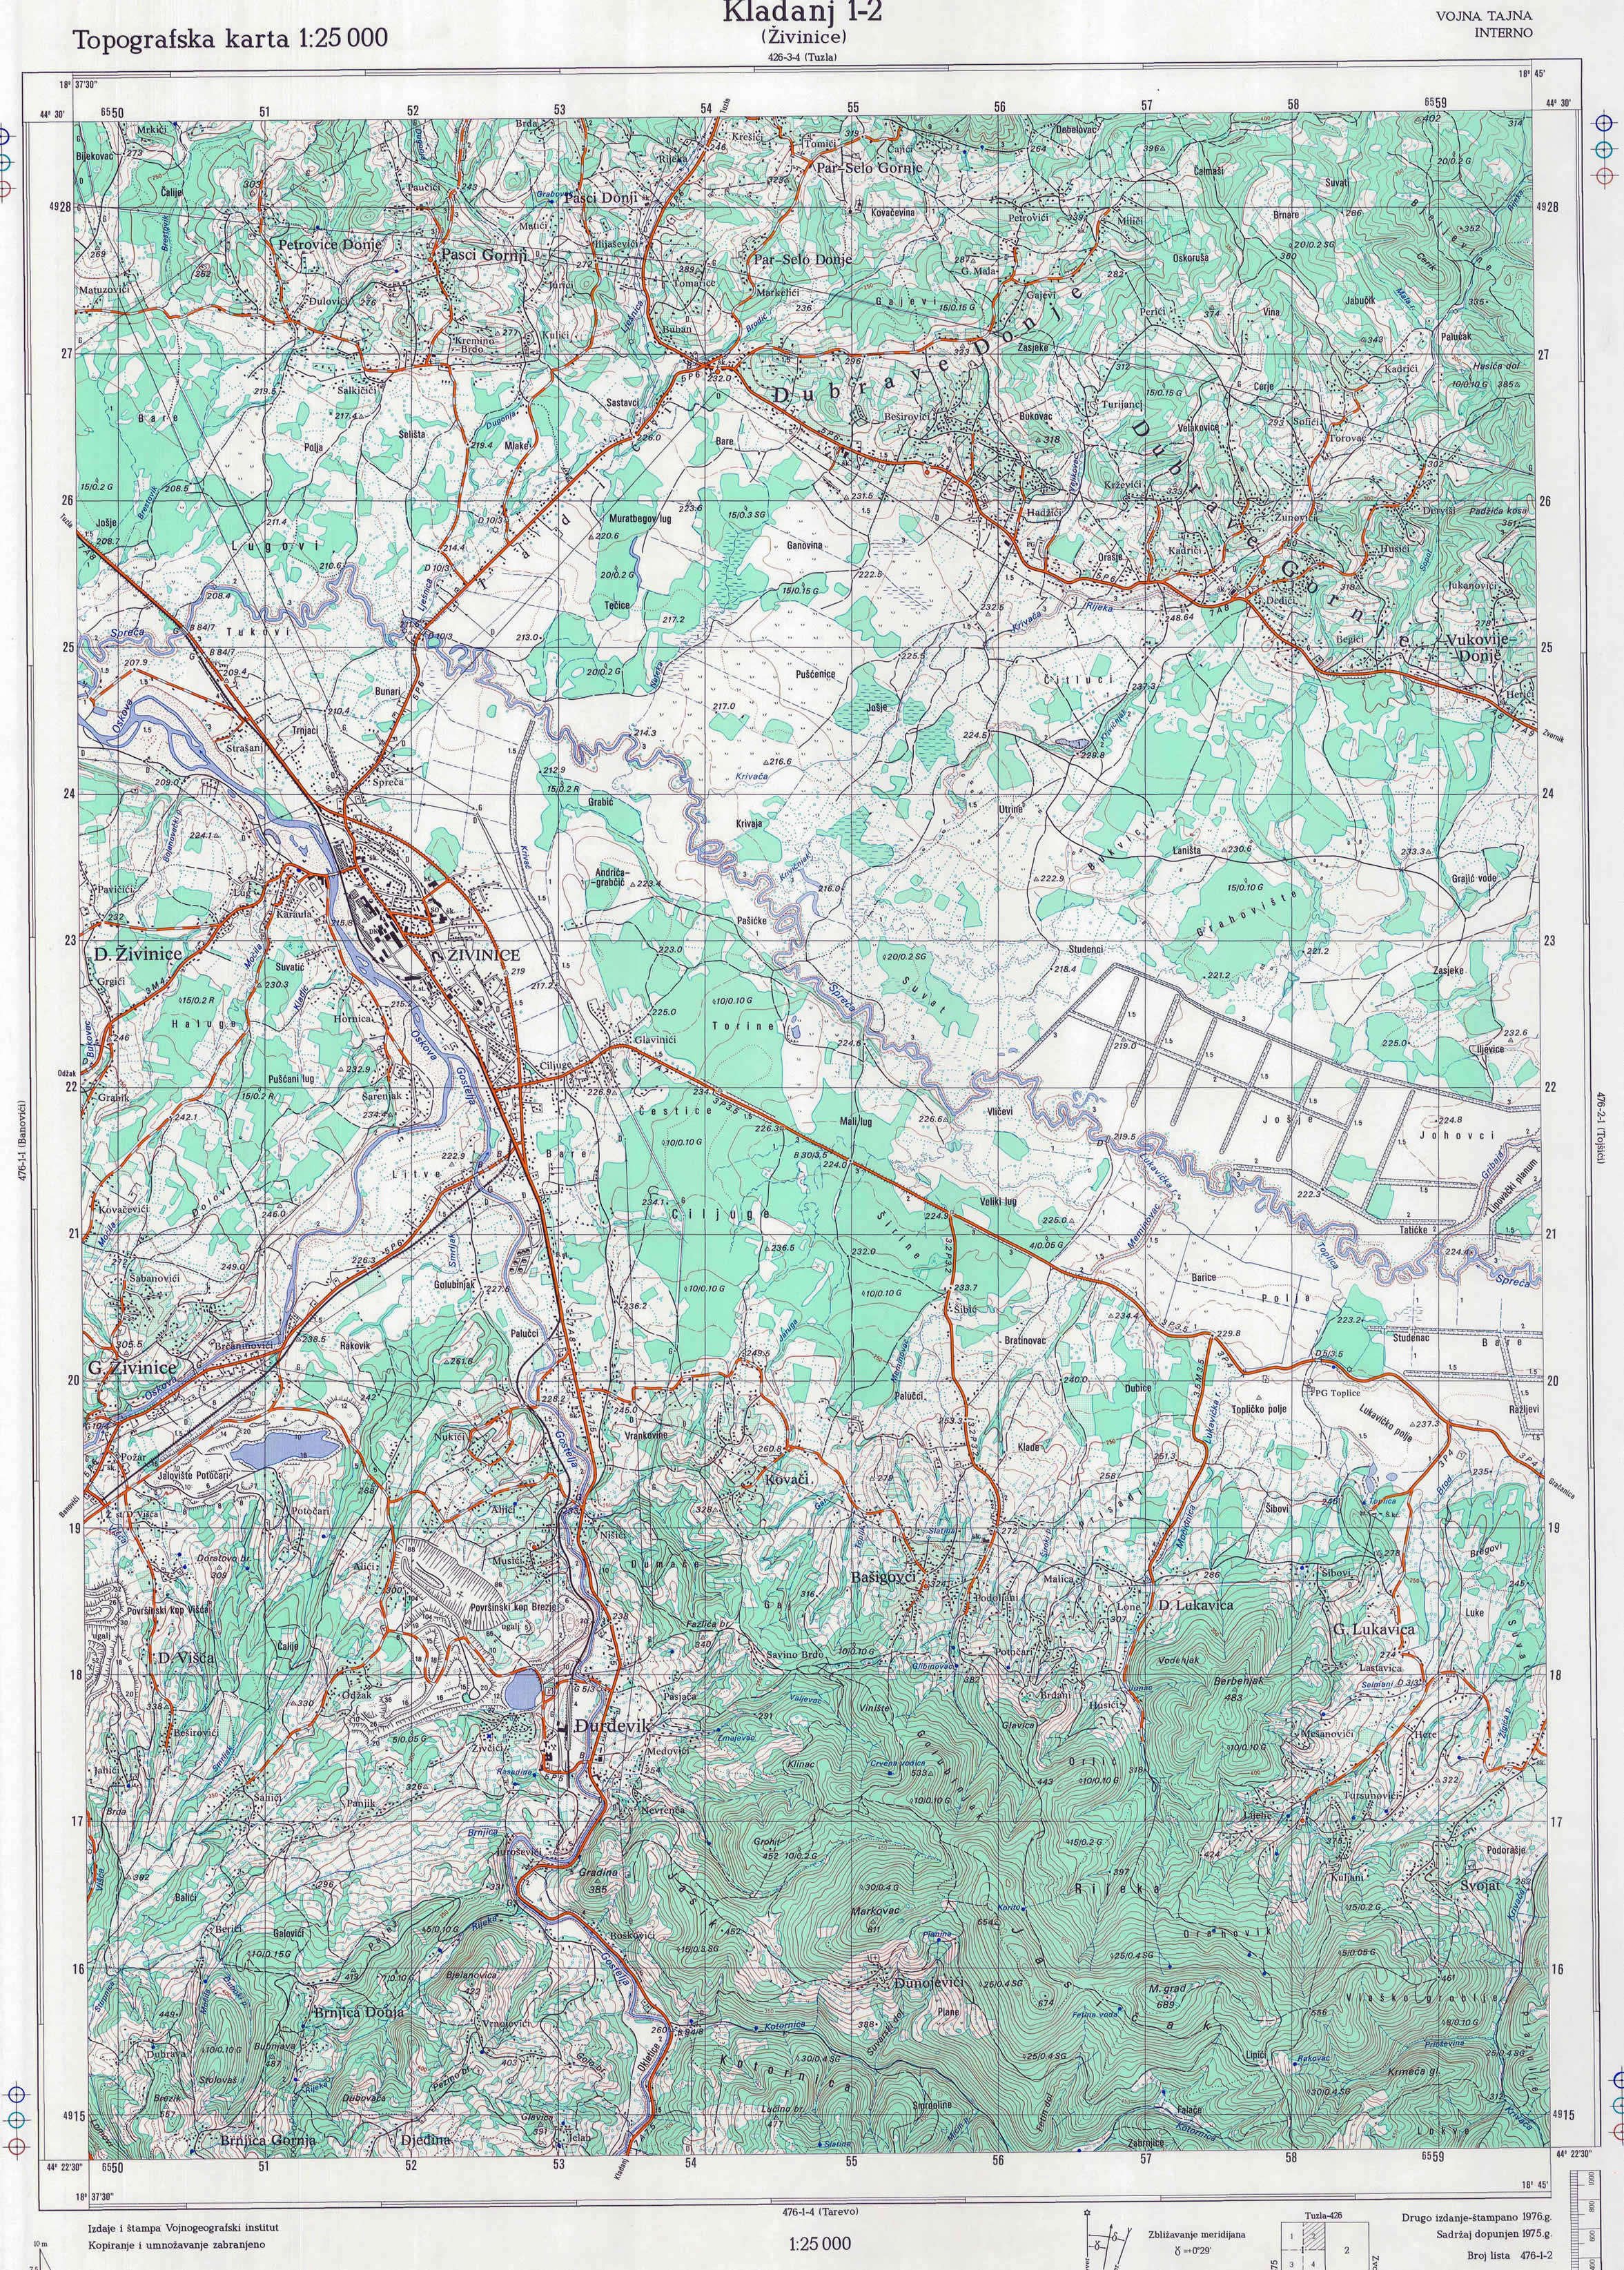  topografska karta Bosne i Hercegovine 25000 JNA  kladanj